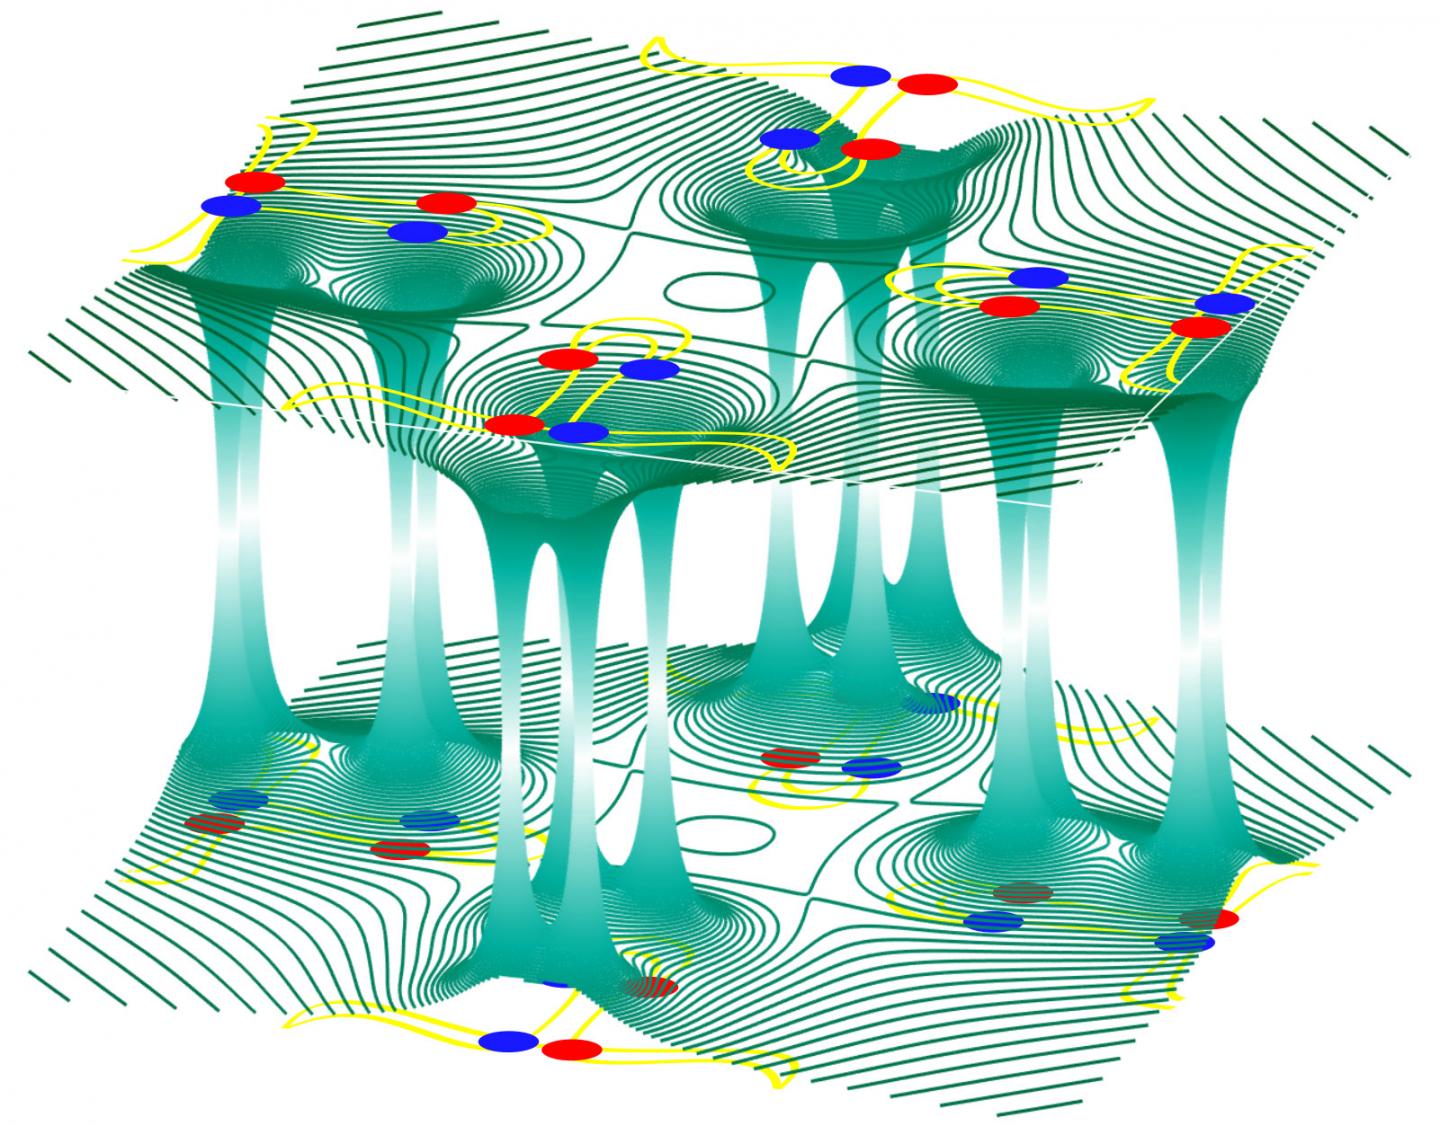 Bizarre Movement of Electrons through Novel Semi-Metal Crystal